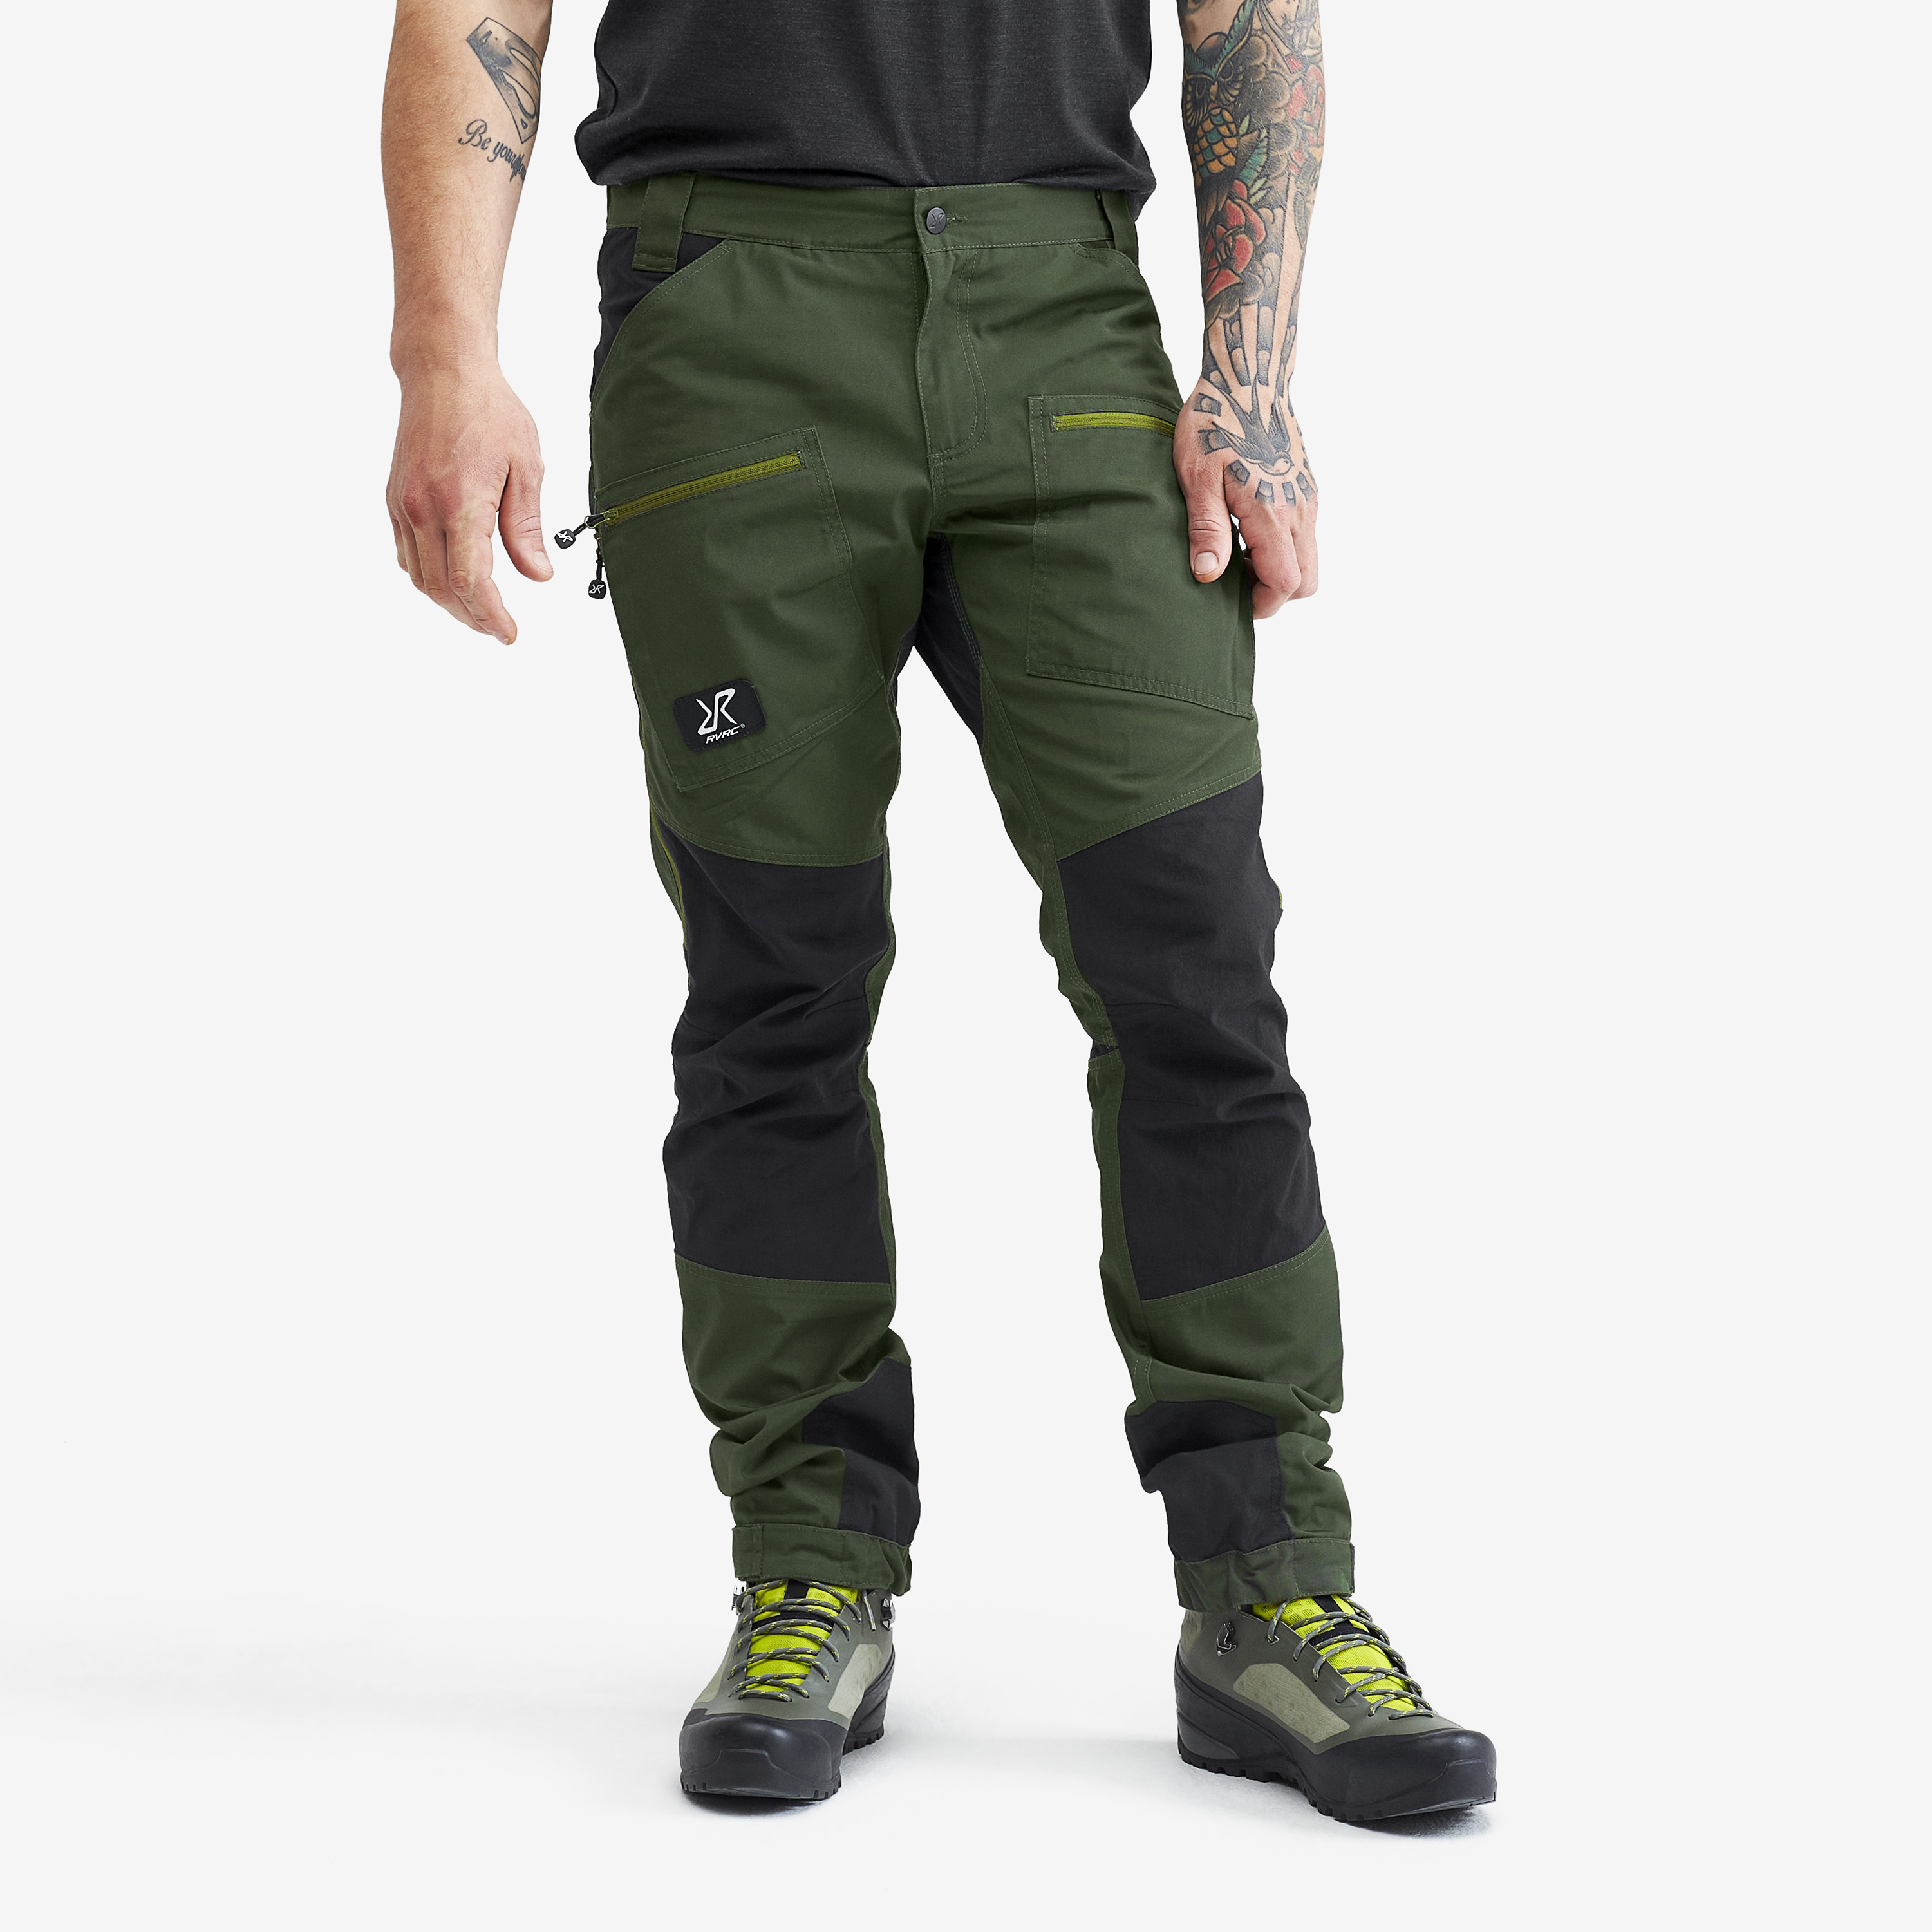 Nordwand Pro Trousers Men Green/Black | RevolutionRace